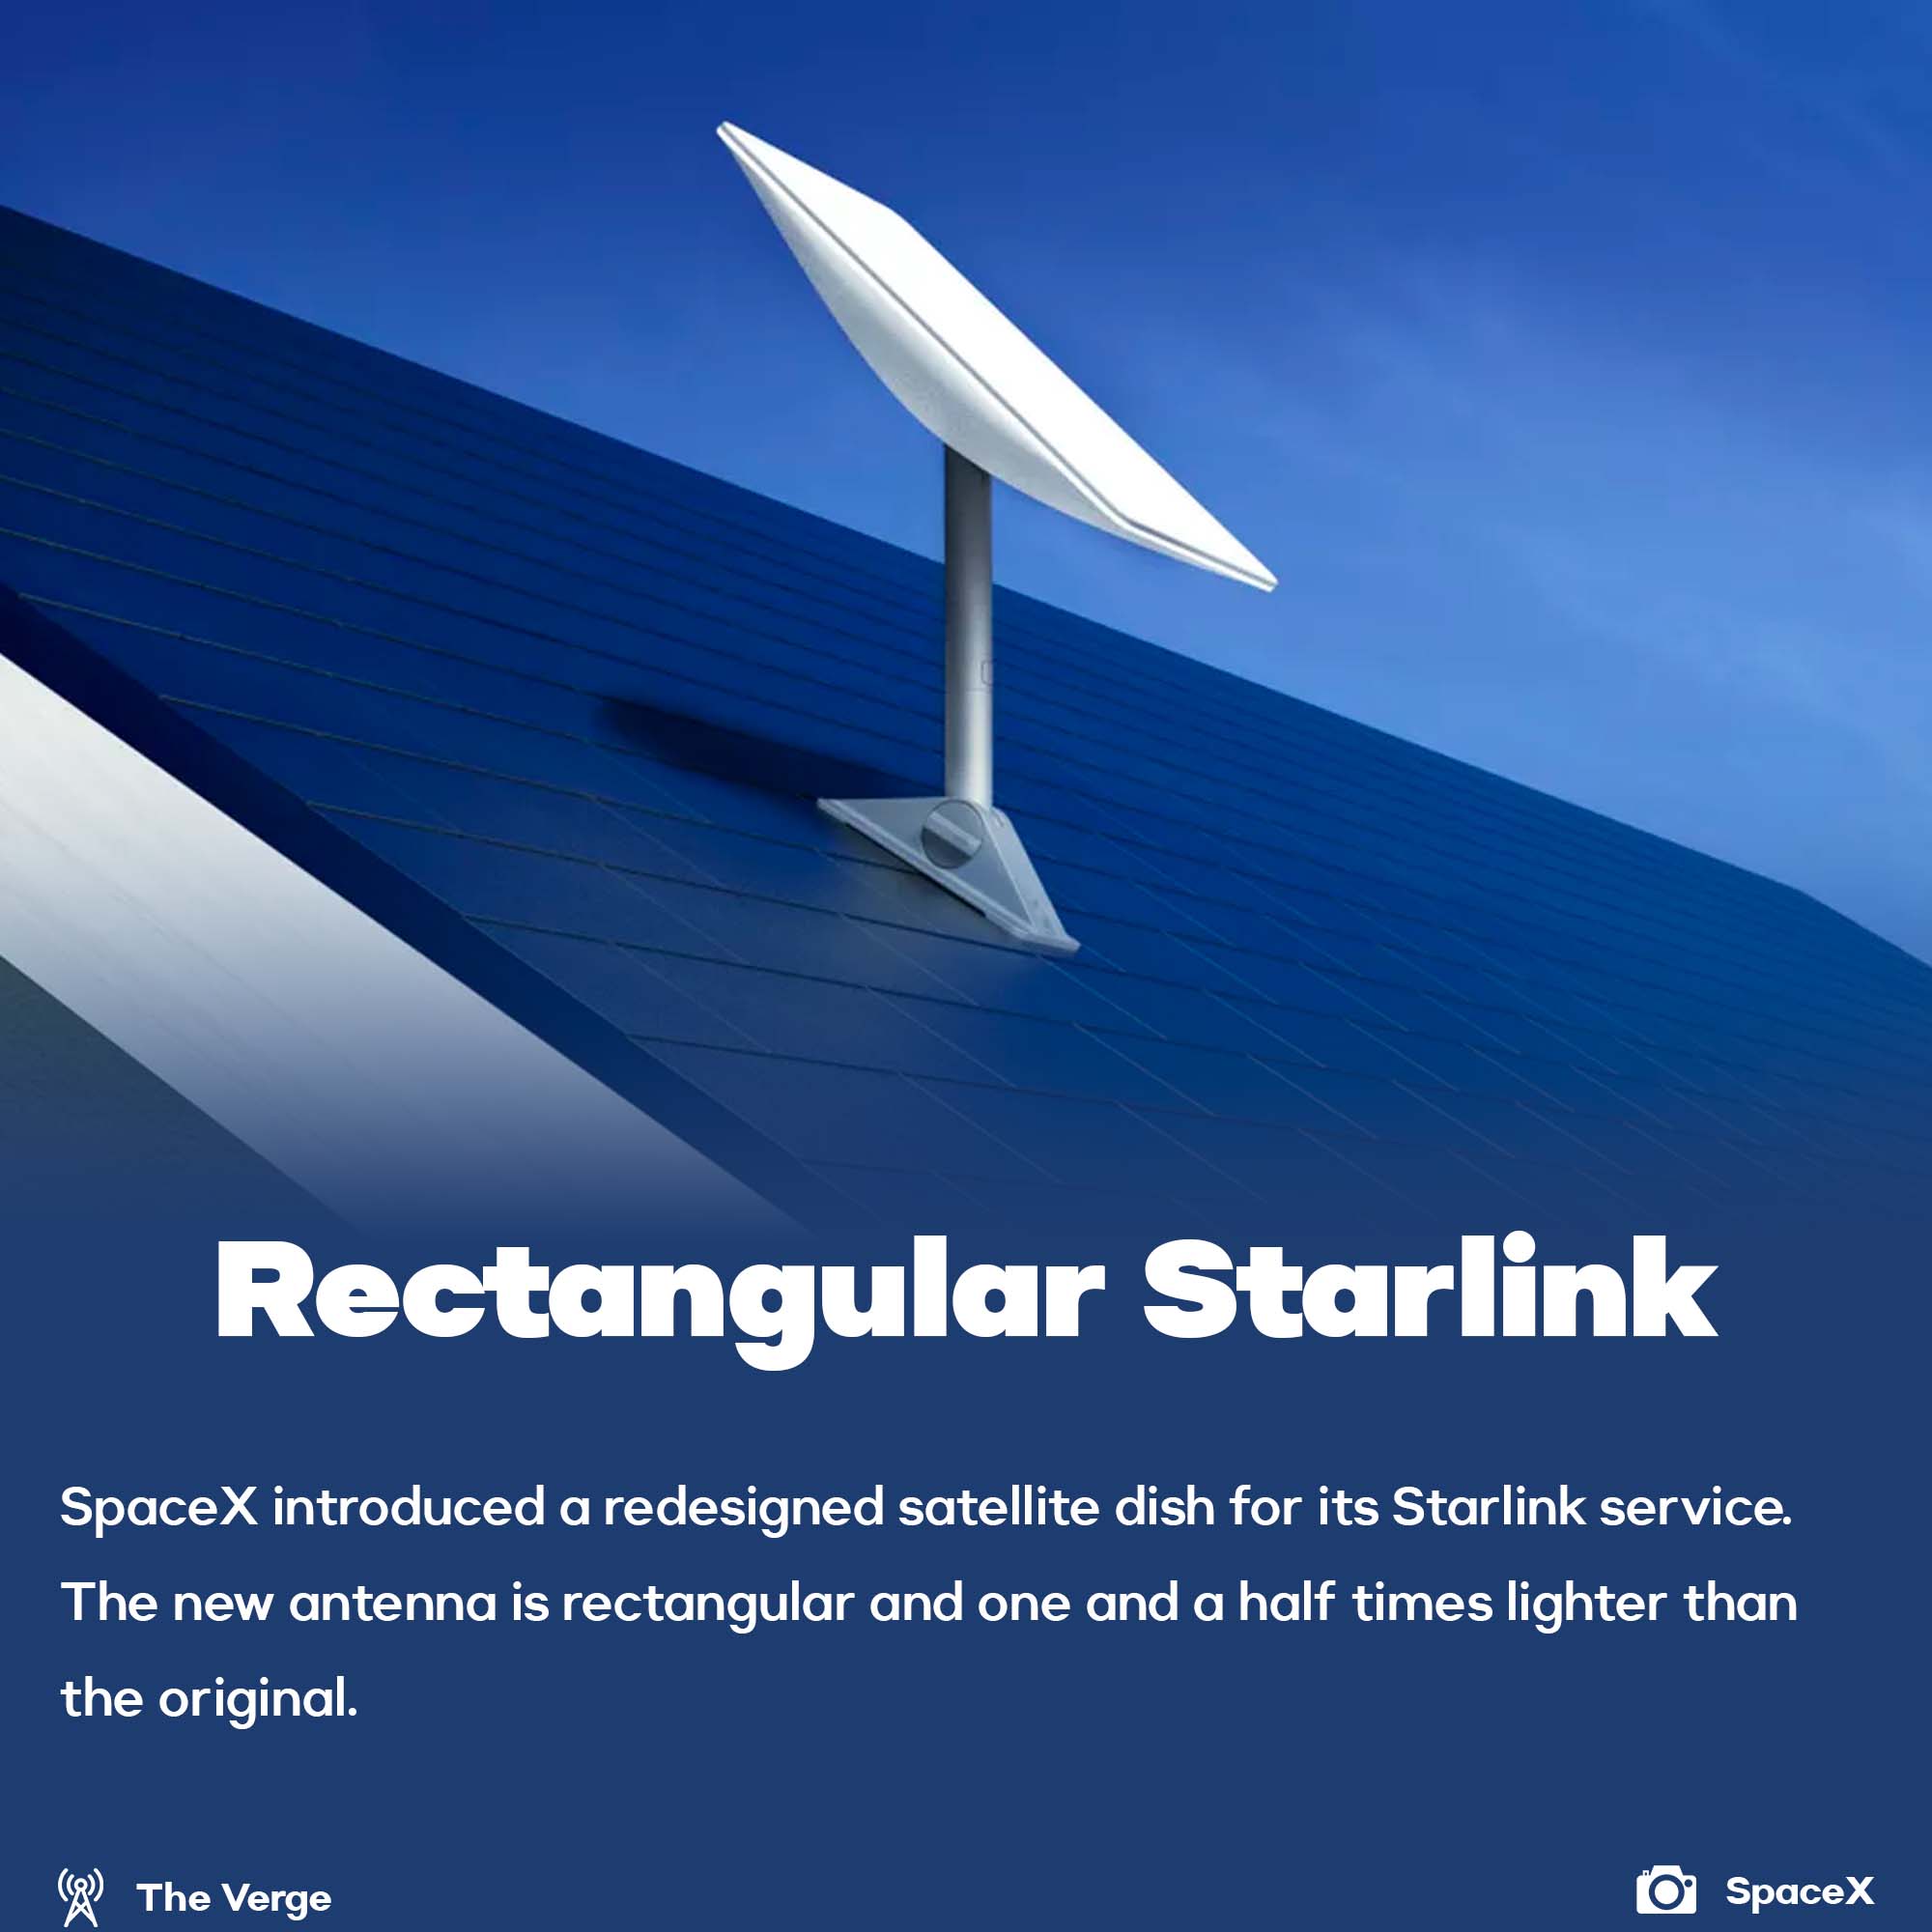 SpaceX redesigned satellite dish